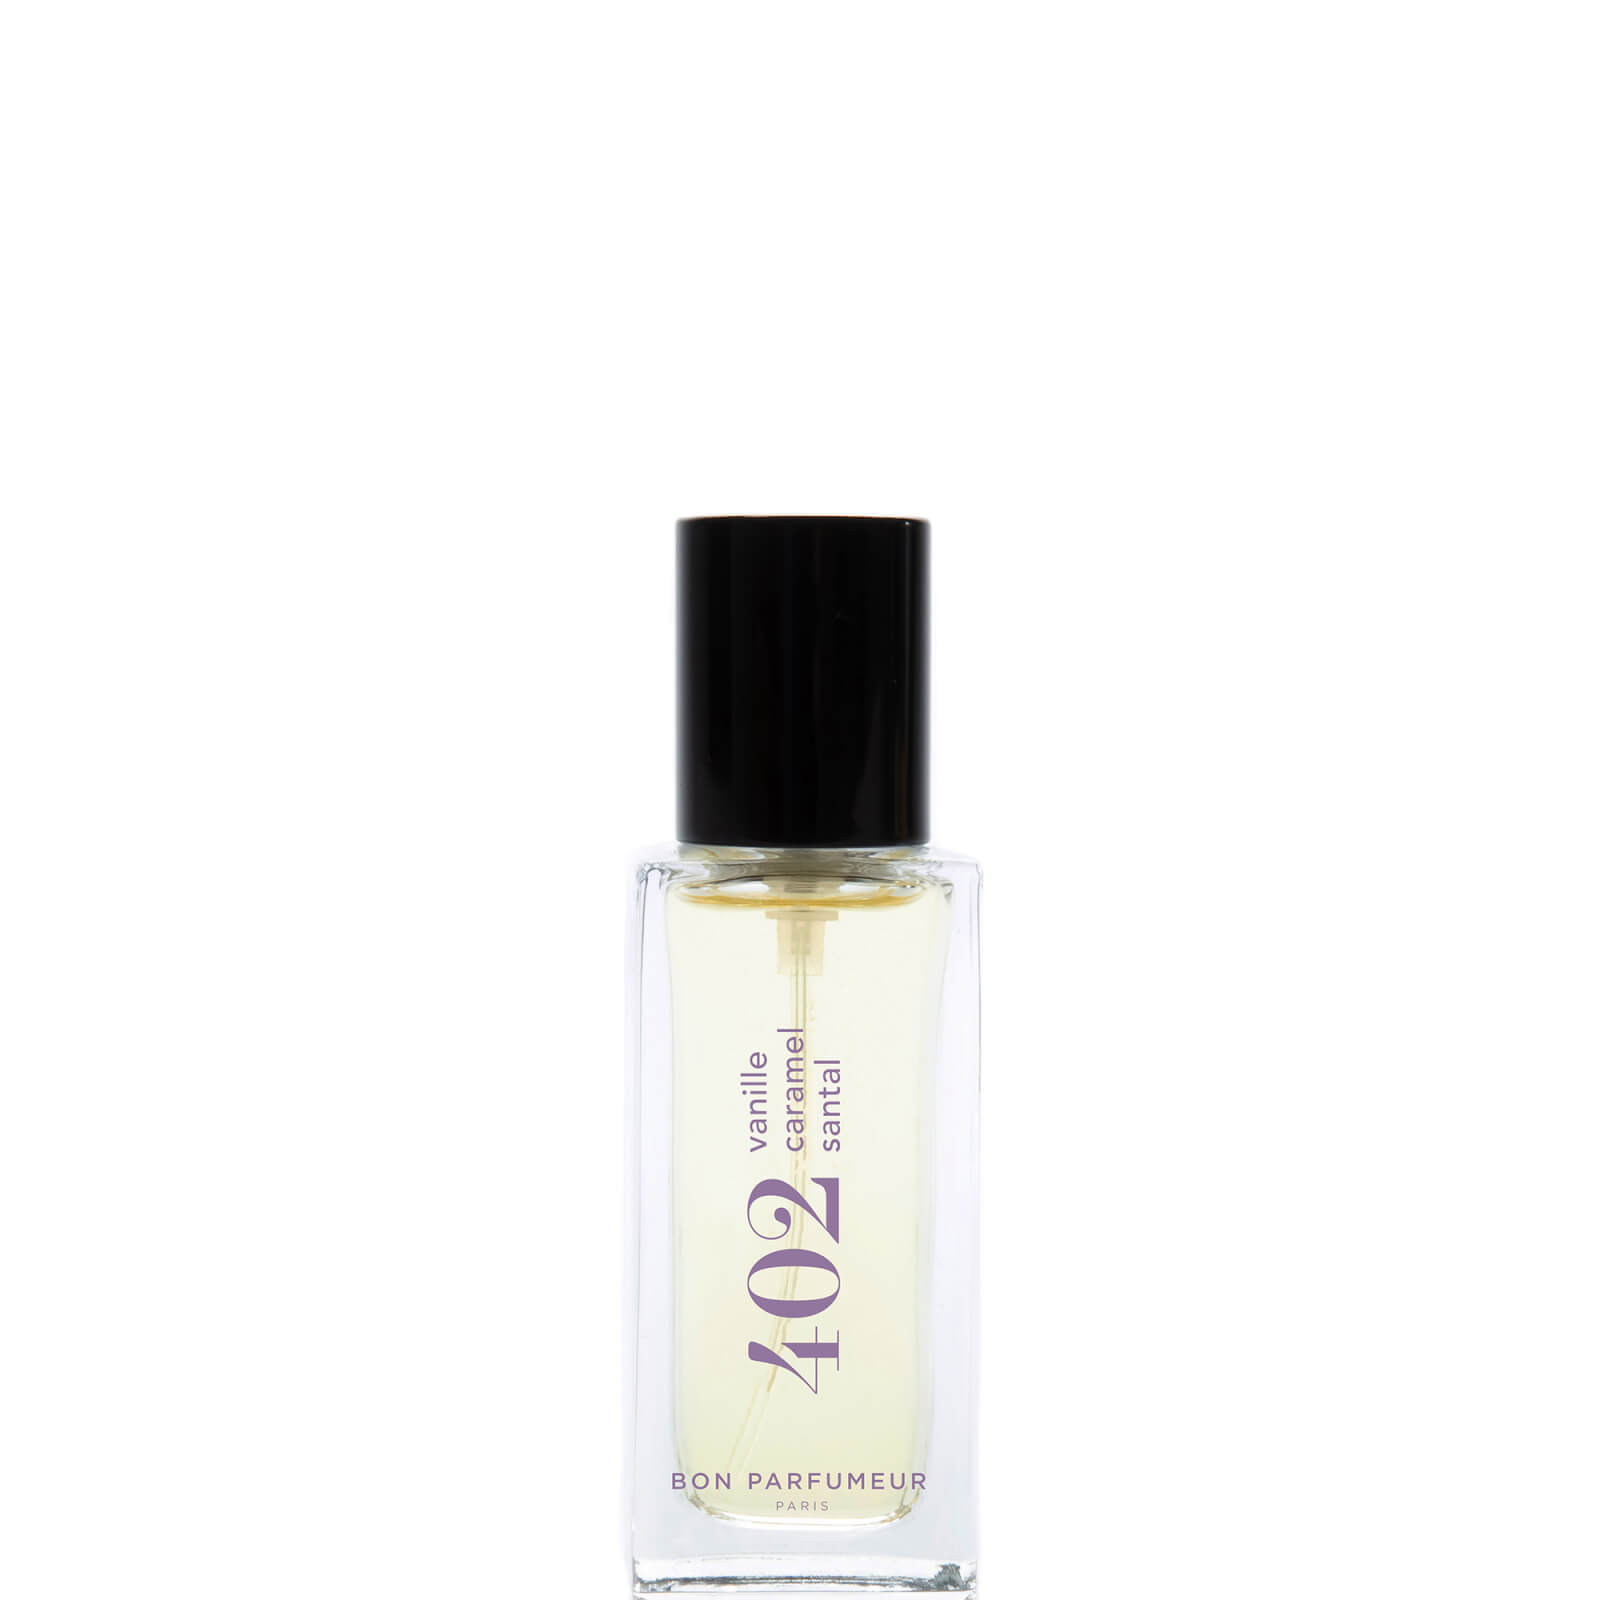 Image of Bon Parfumeur 402 Vaniglia Toffee Sandalwood Eau de Parfum - 15ml